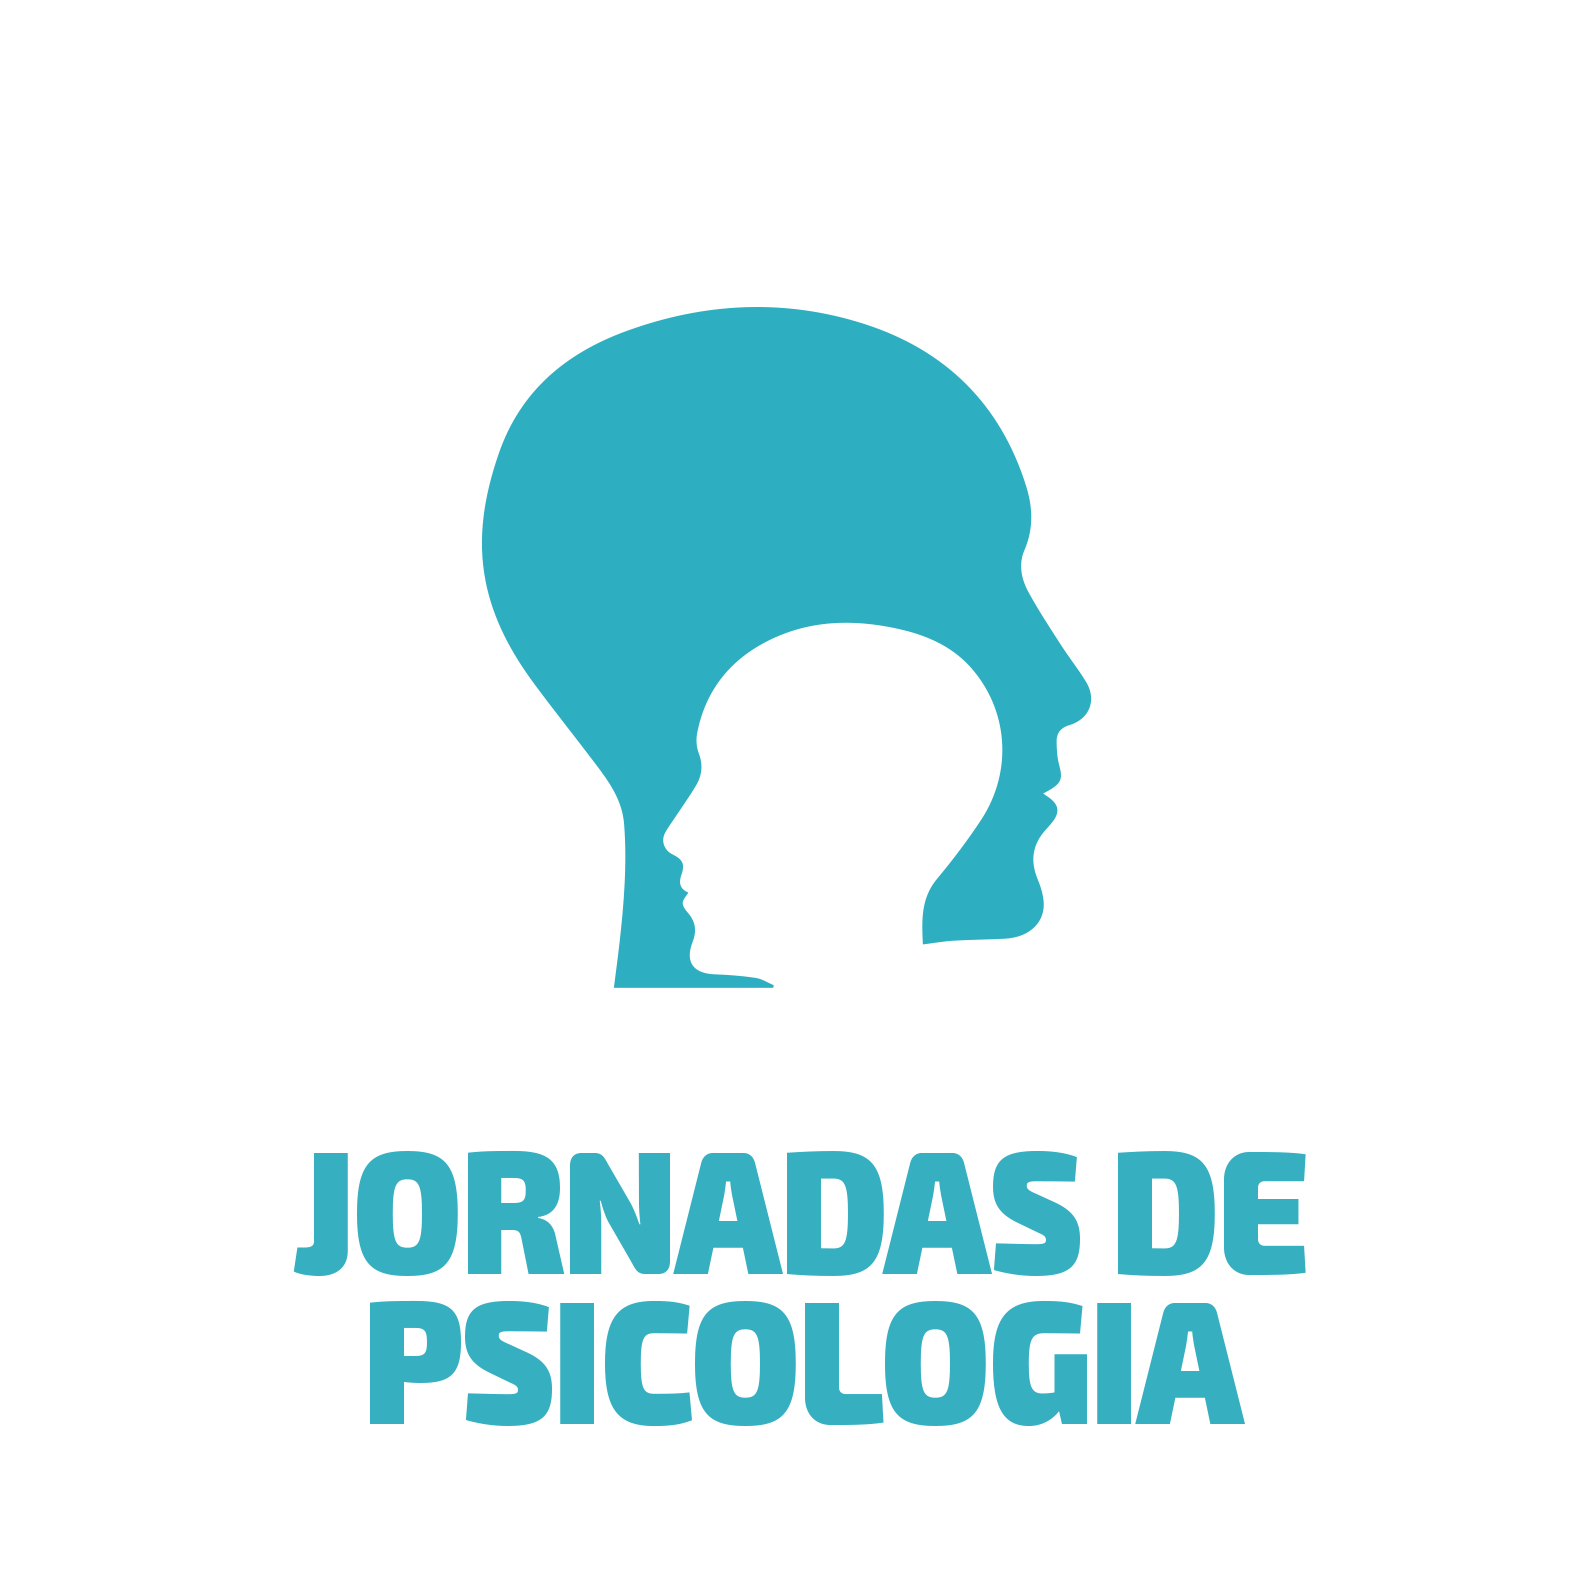 jornadas psicologia.png (60 KB)